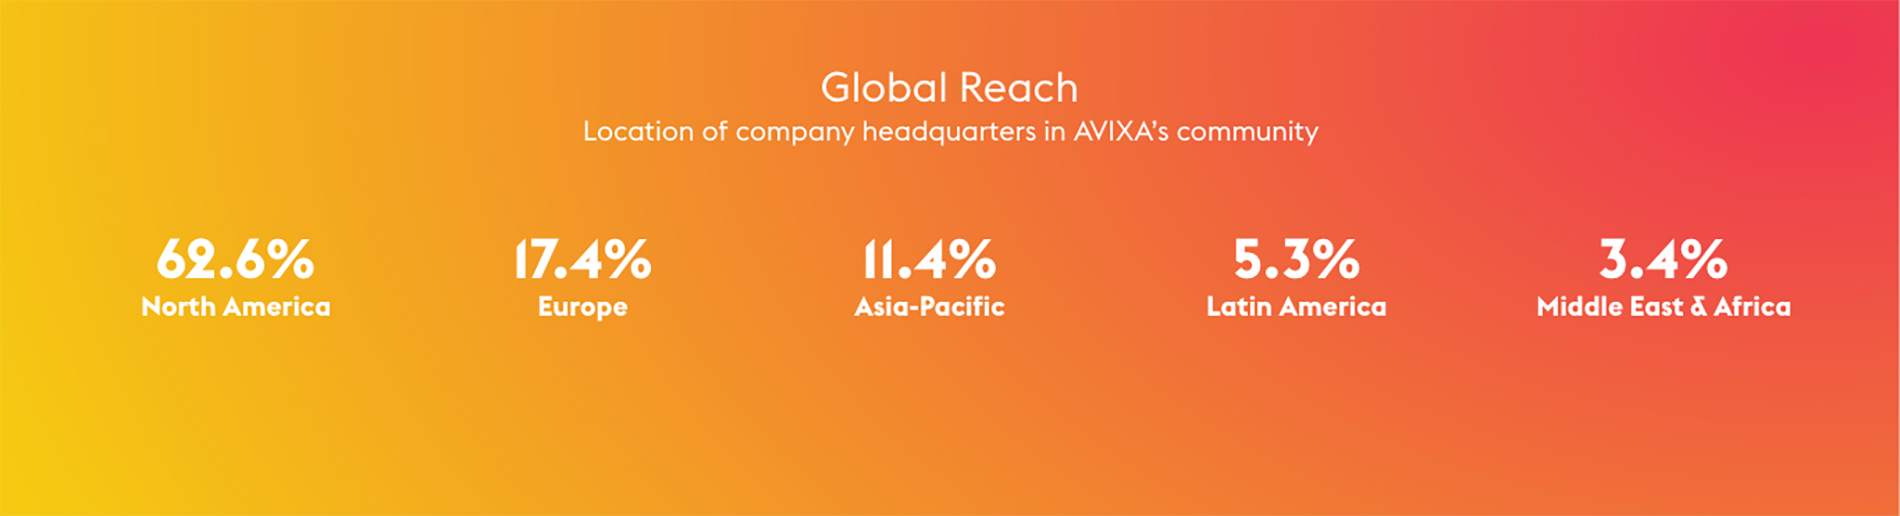 AVIXA Global Reach